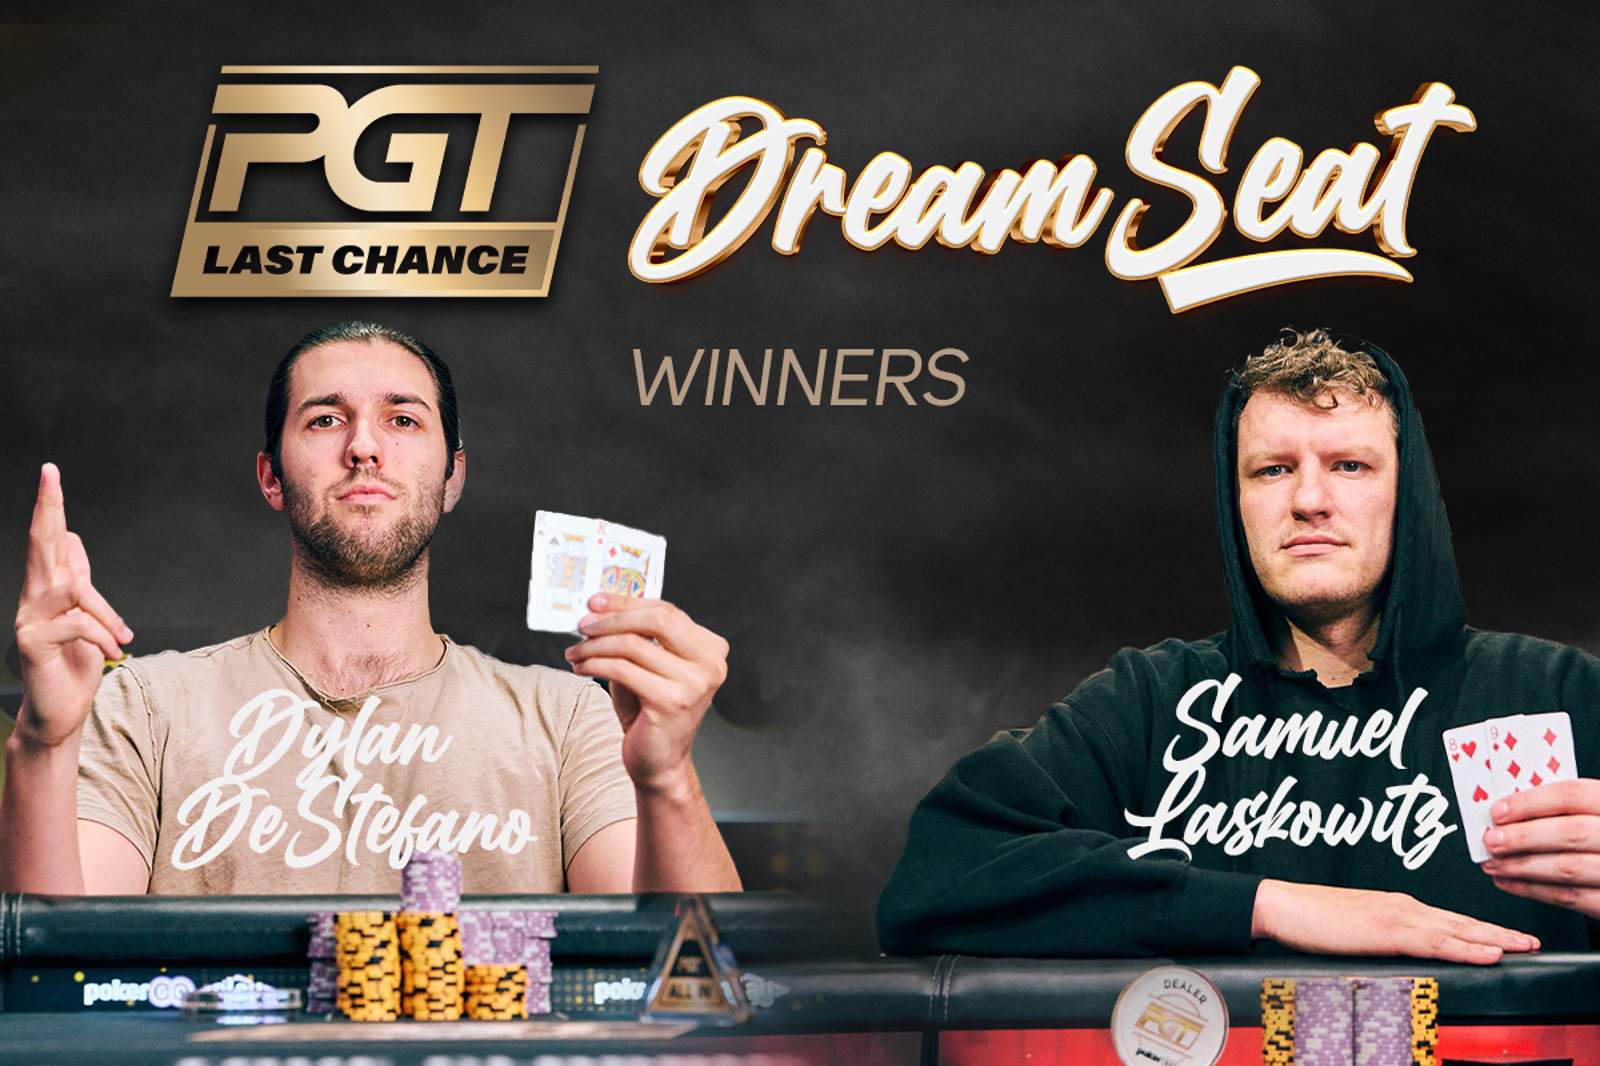 Samuel Laskowitz and Dylan DeStefano Win PGT Last Chance Dream Seats